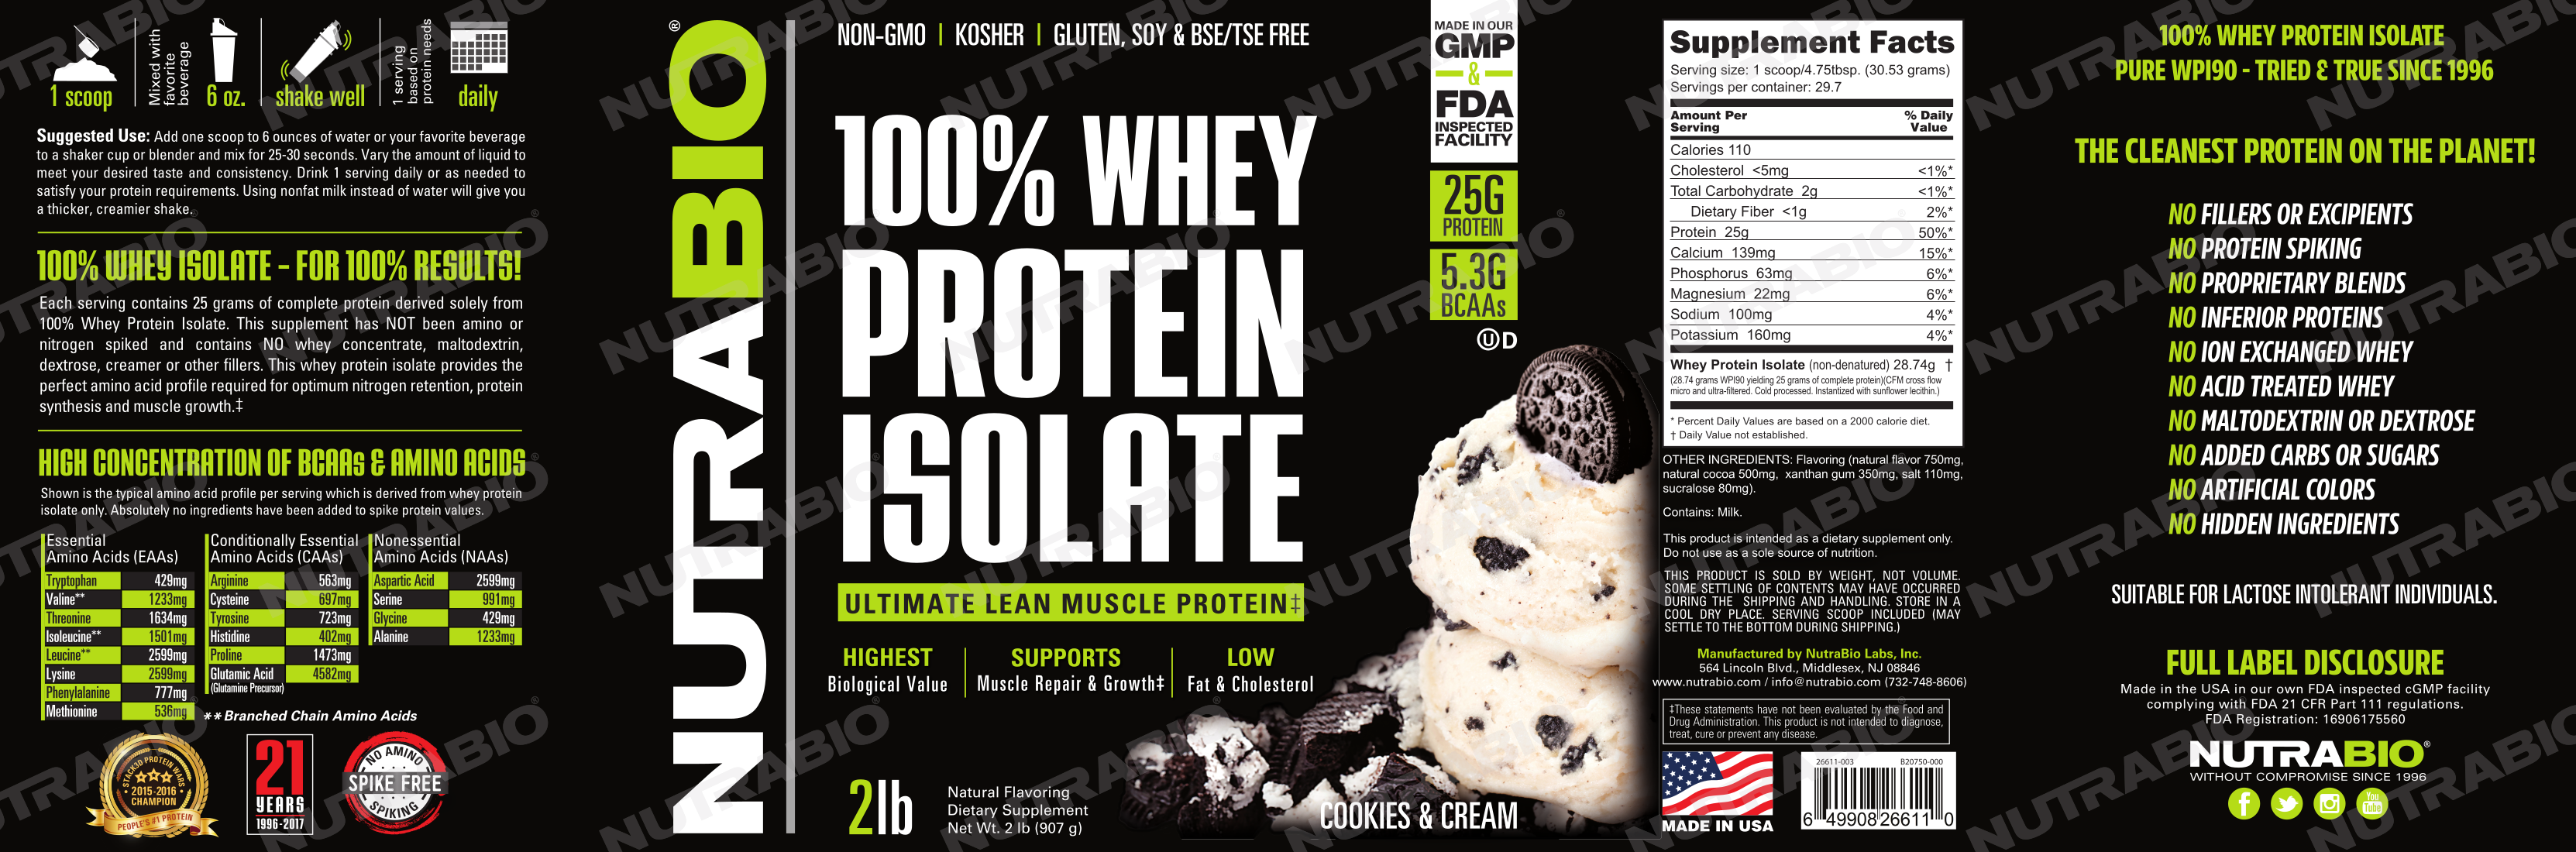 NutraBio 100% Whey Protein Isolate Ice Cream Cookie Dream Label